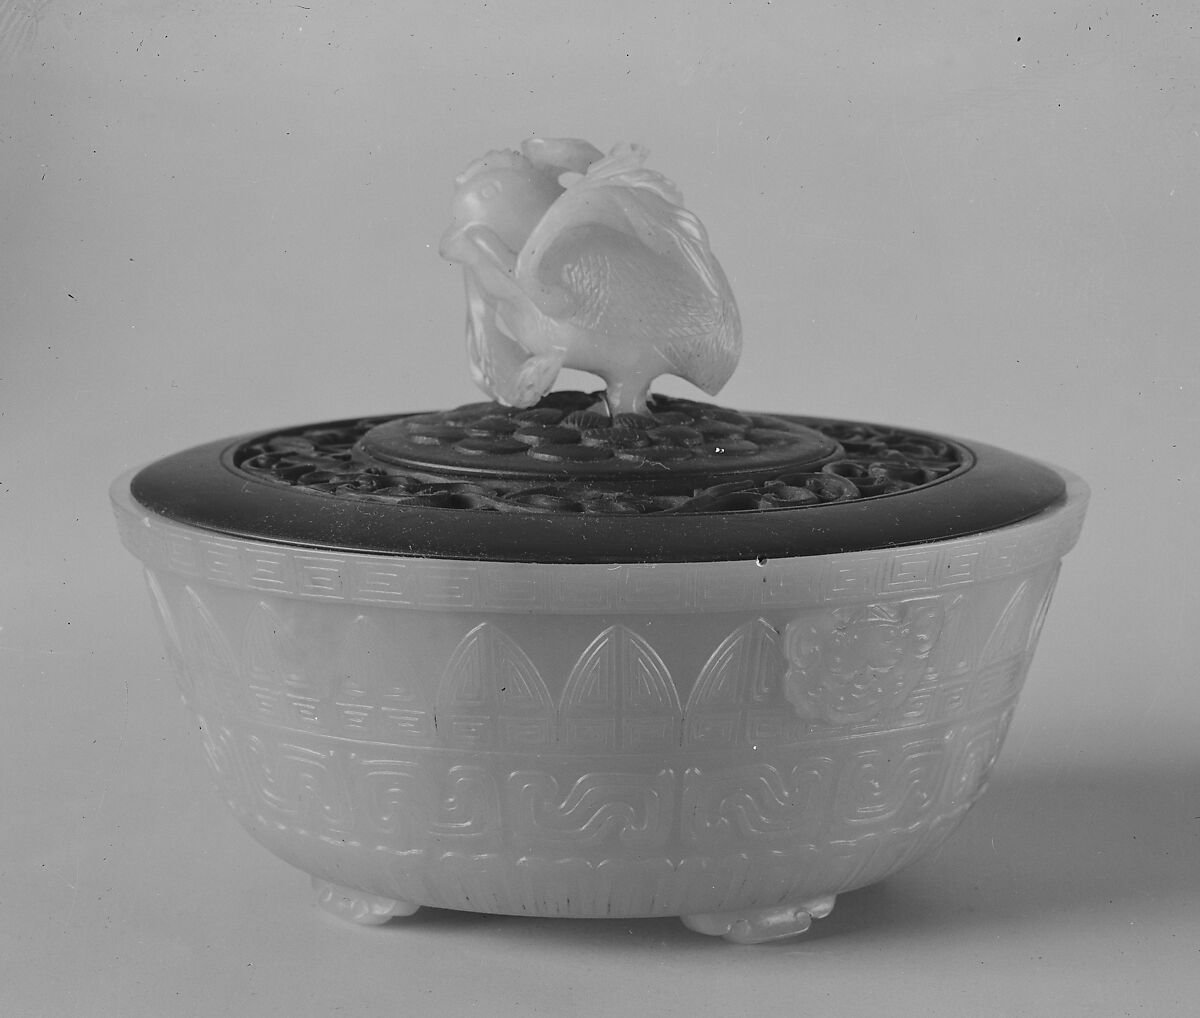 Bowl with archaic design, Jade (nephrite), China 